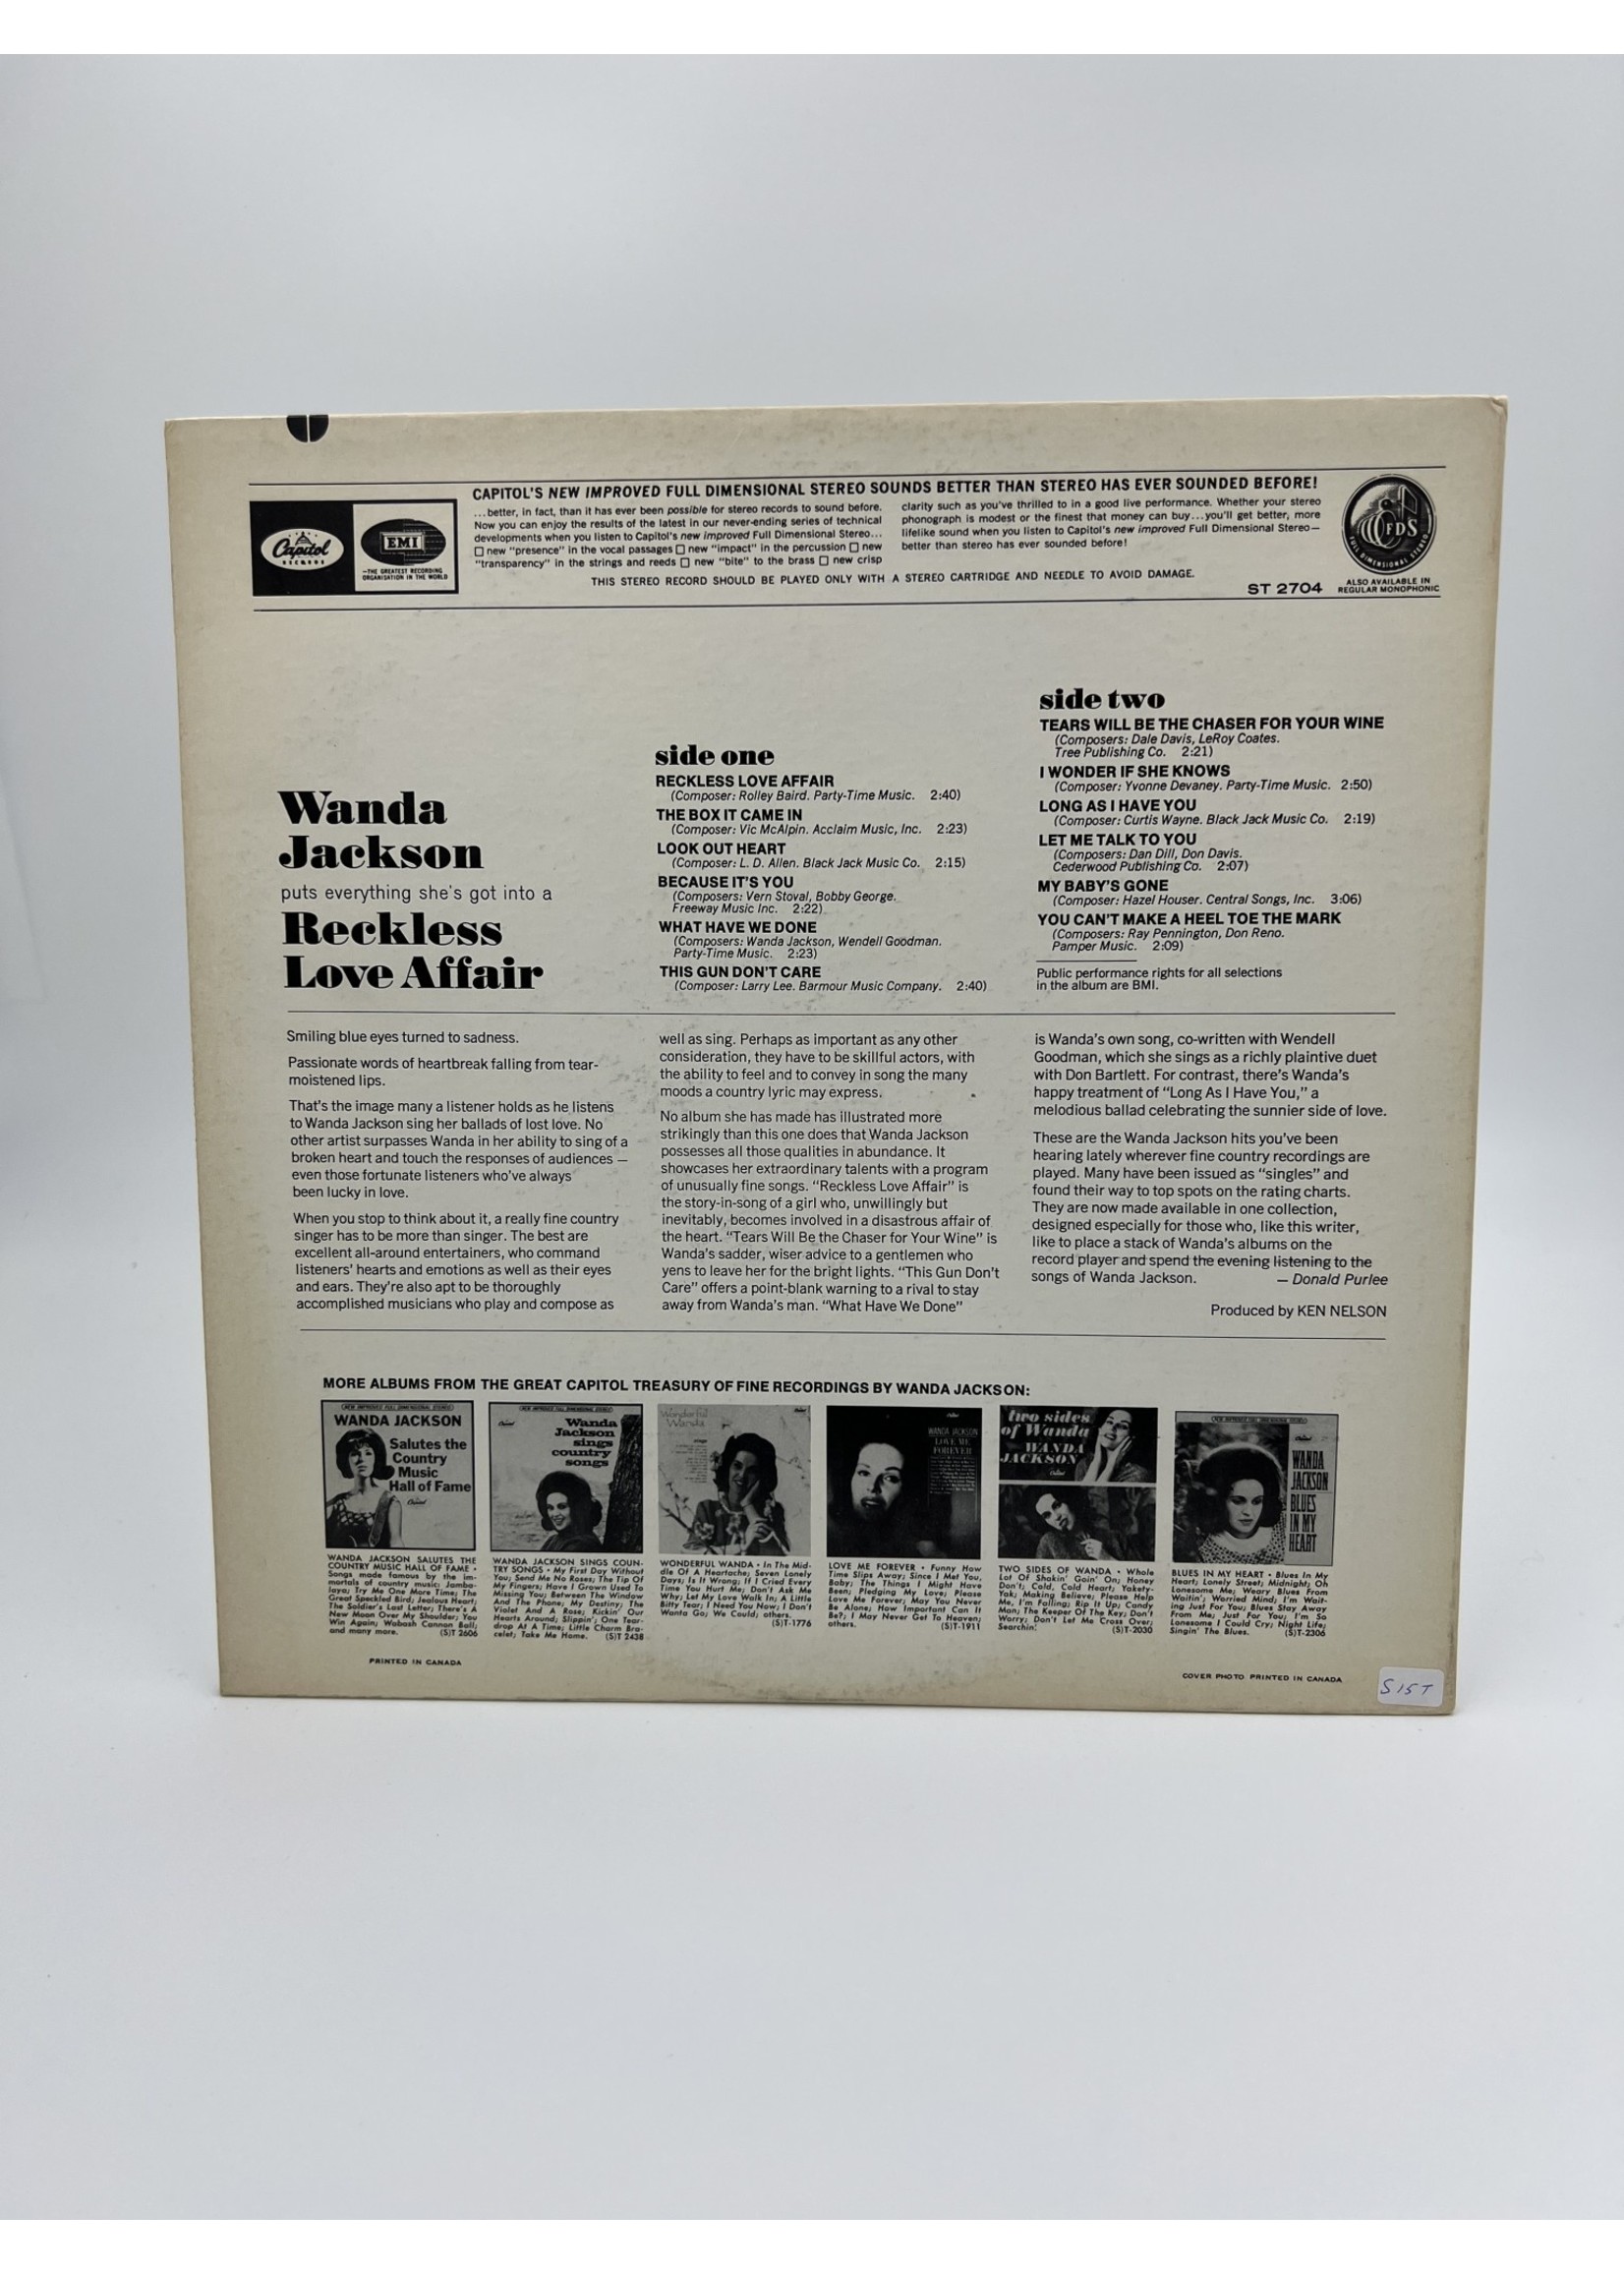 LP Wanda Jackson Reckless Love Affair LP RECORD